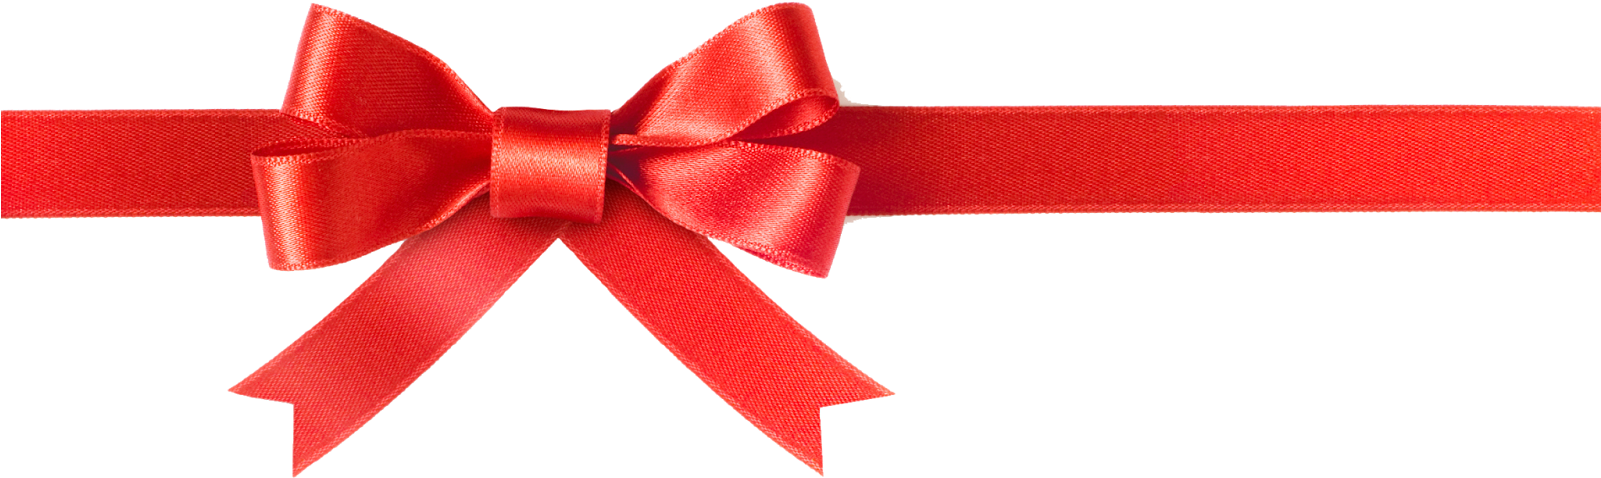 Red Ribbon Christmas Gift Clip Art - Red Ribbon Christmas Gift Clip Art (1600x873)